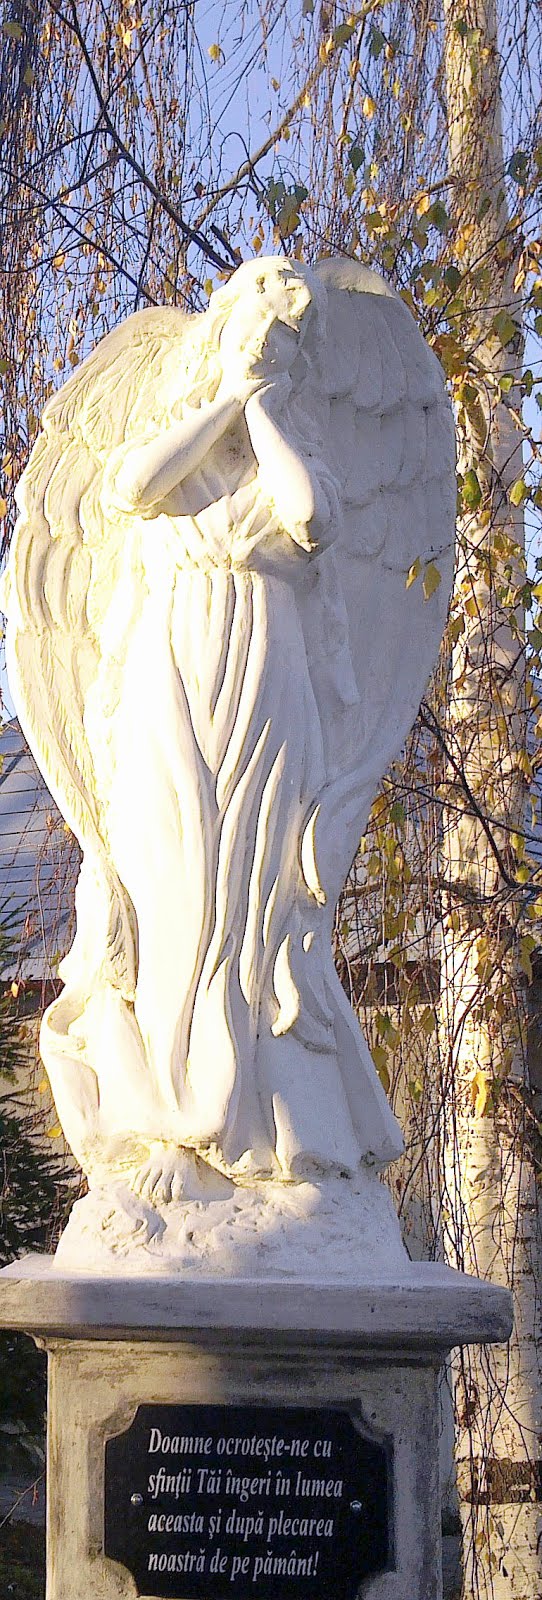 Înger de Sfântul Nicolae,Biserica Sfântul Spiridon,Cimitir,orașul Tîrgu Neamț,5 decembrie 2019